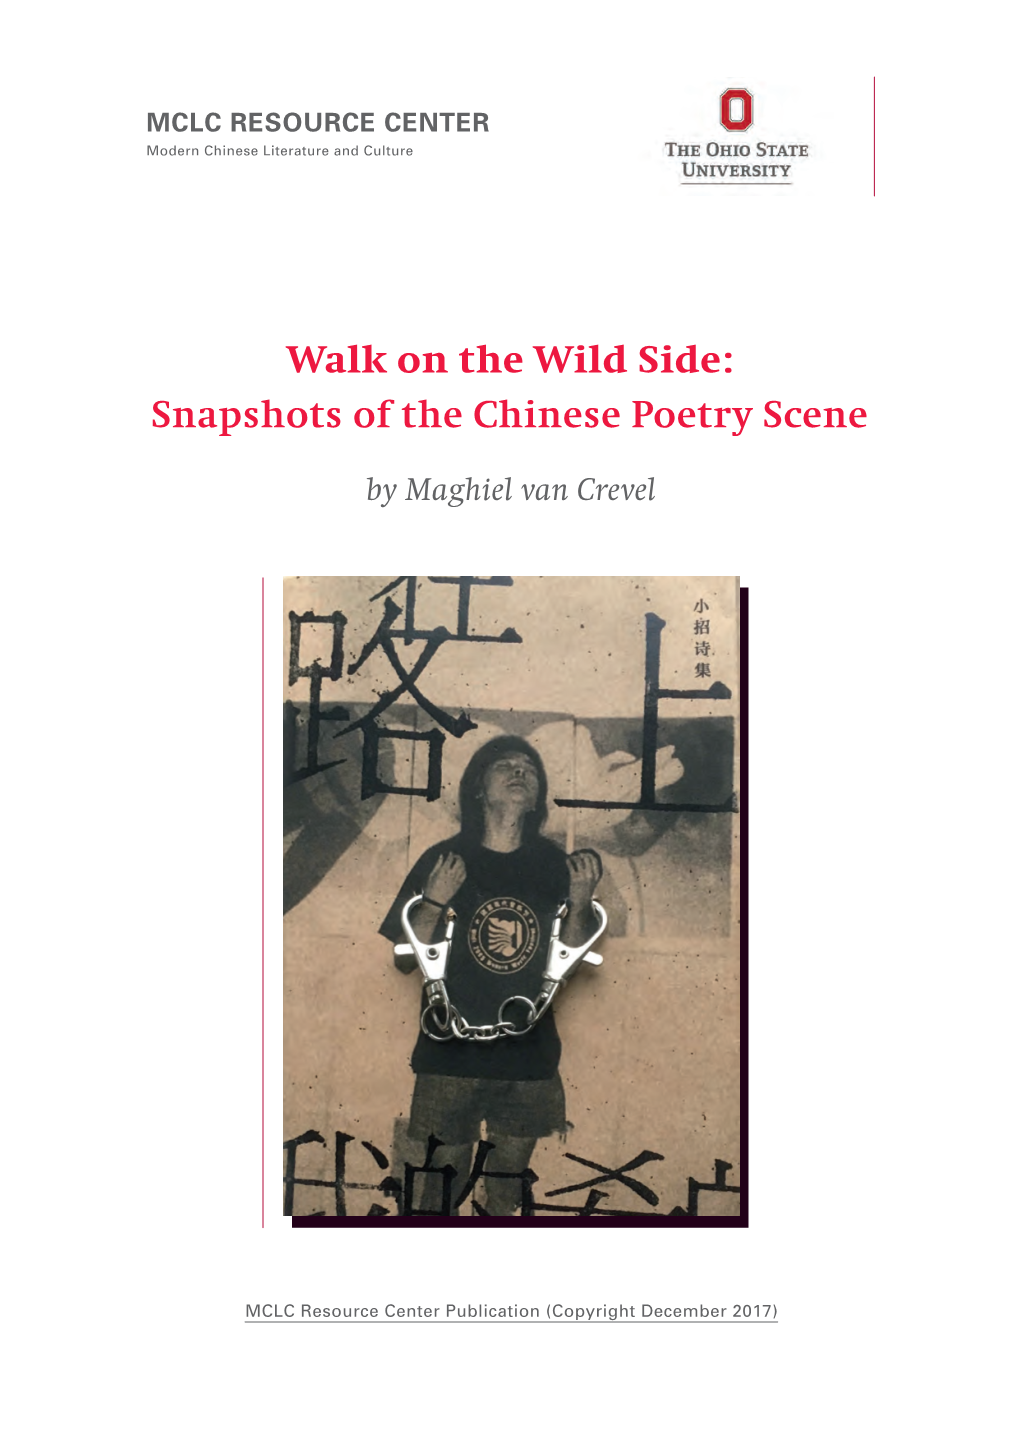 Snapshots of the Chinese Poetry Scene